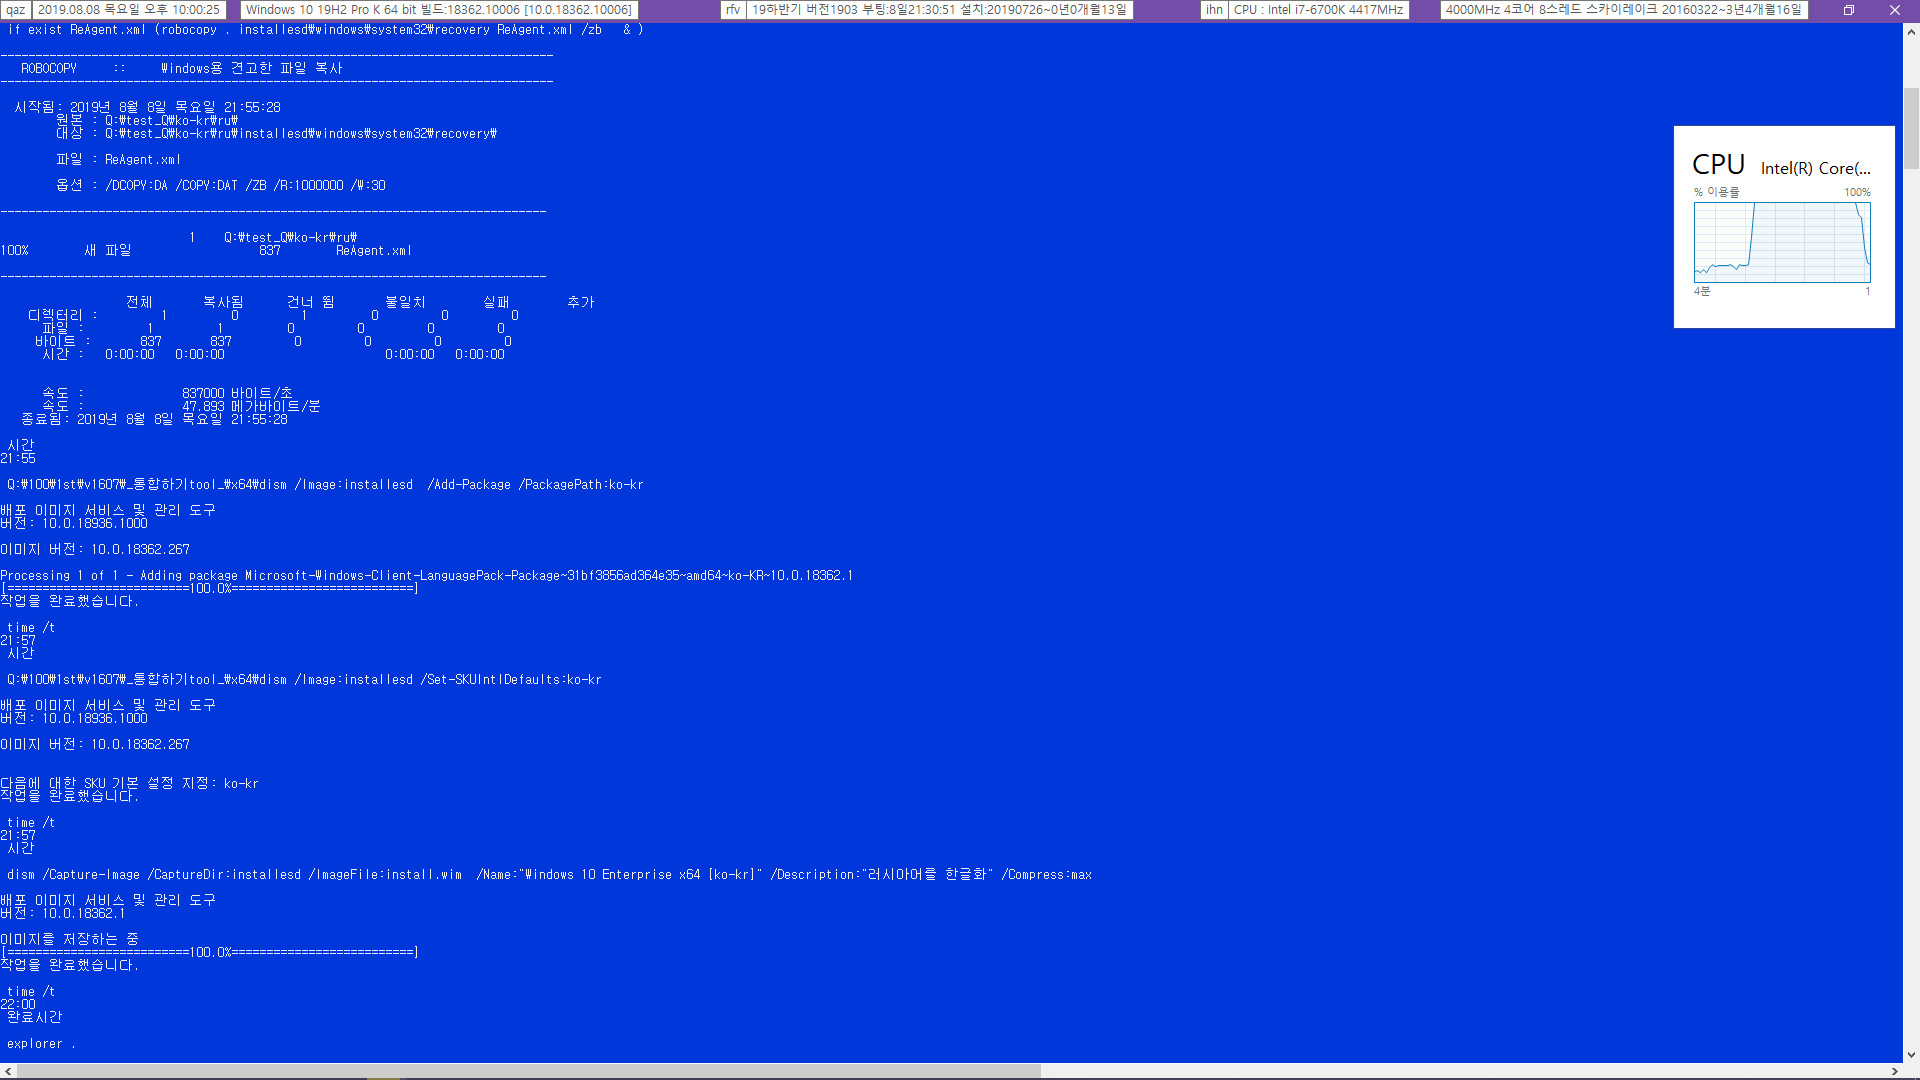 Windows 10 Enterprise x64 lite 1903 build 18362.267 by Zosma.iso - 러시아어 한글화 시도 - iso 뼈대만 한글판 iso로 교체하니까 설치 거부되네요-그래서 install.esd 윈도까지 한글화 시도 2019-08-08_220025.jpg